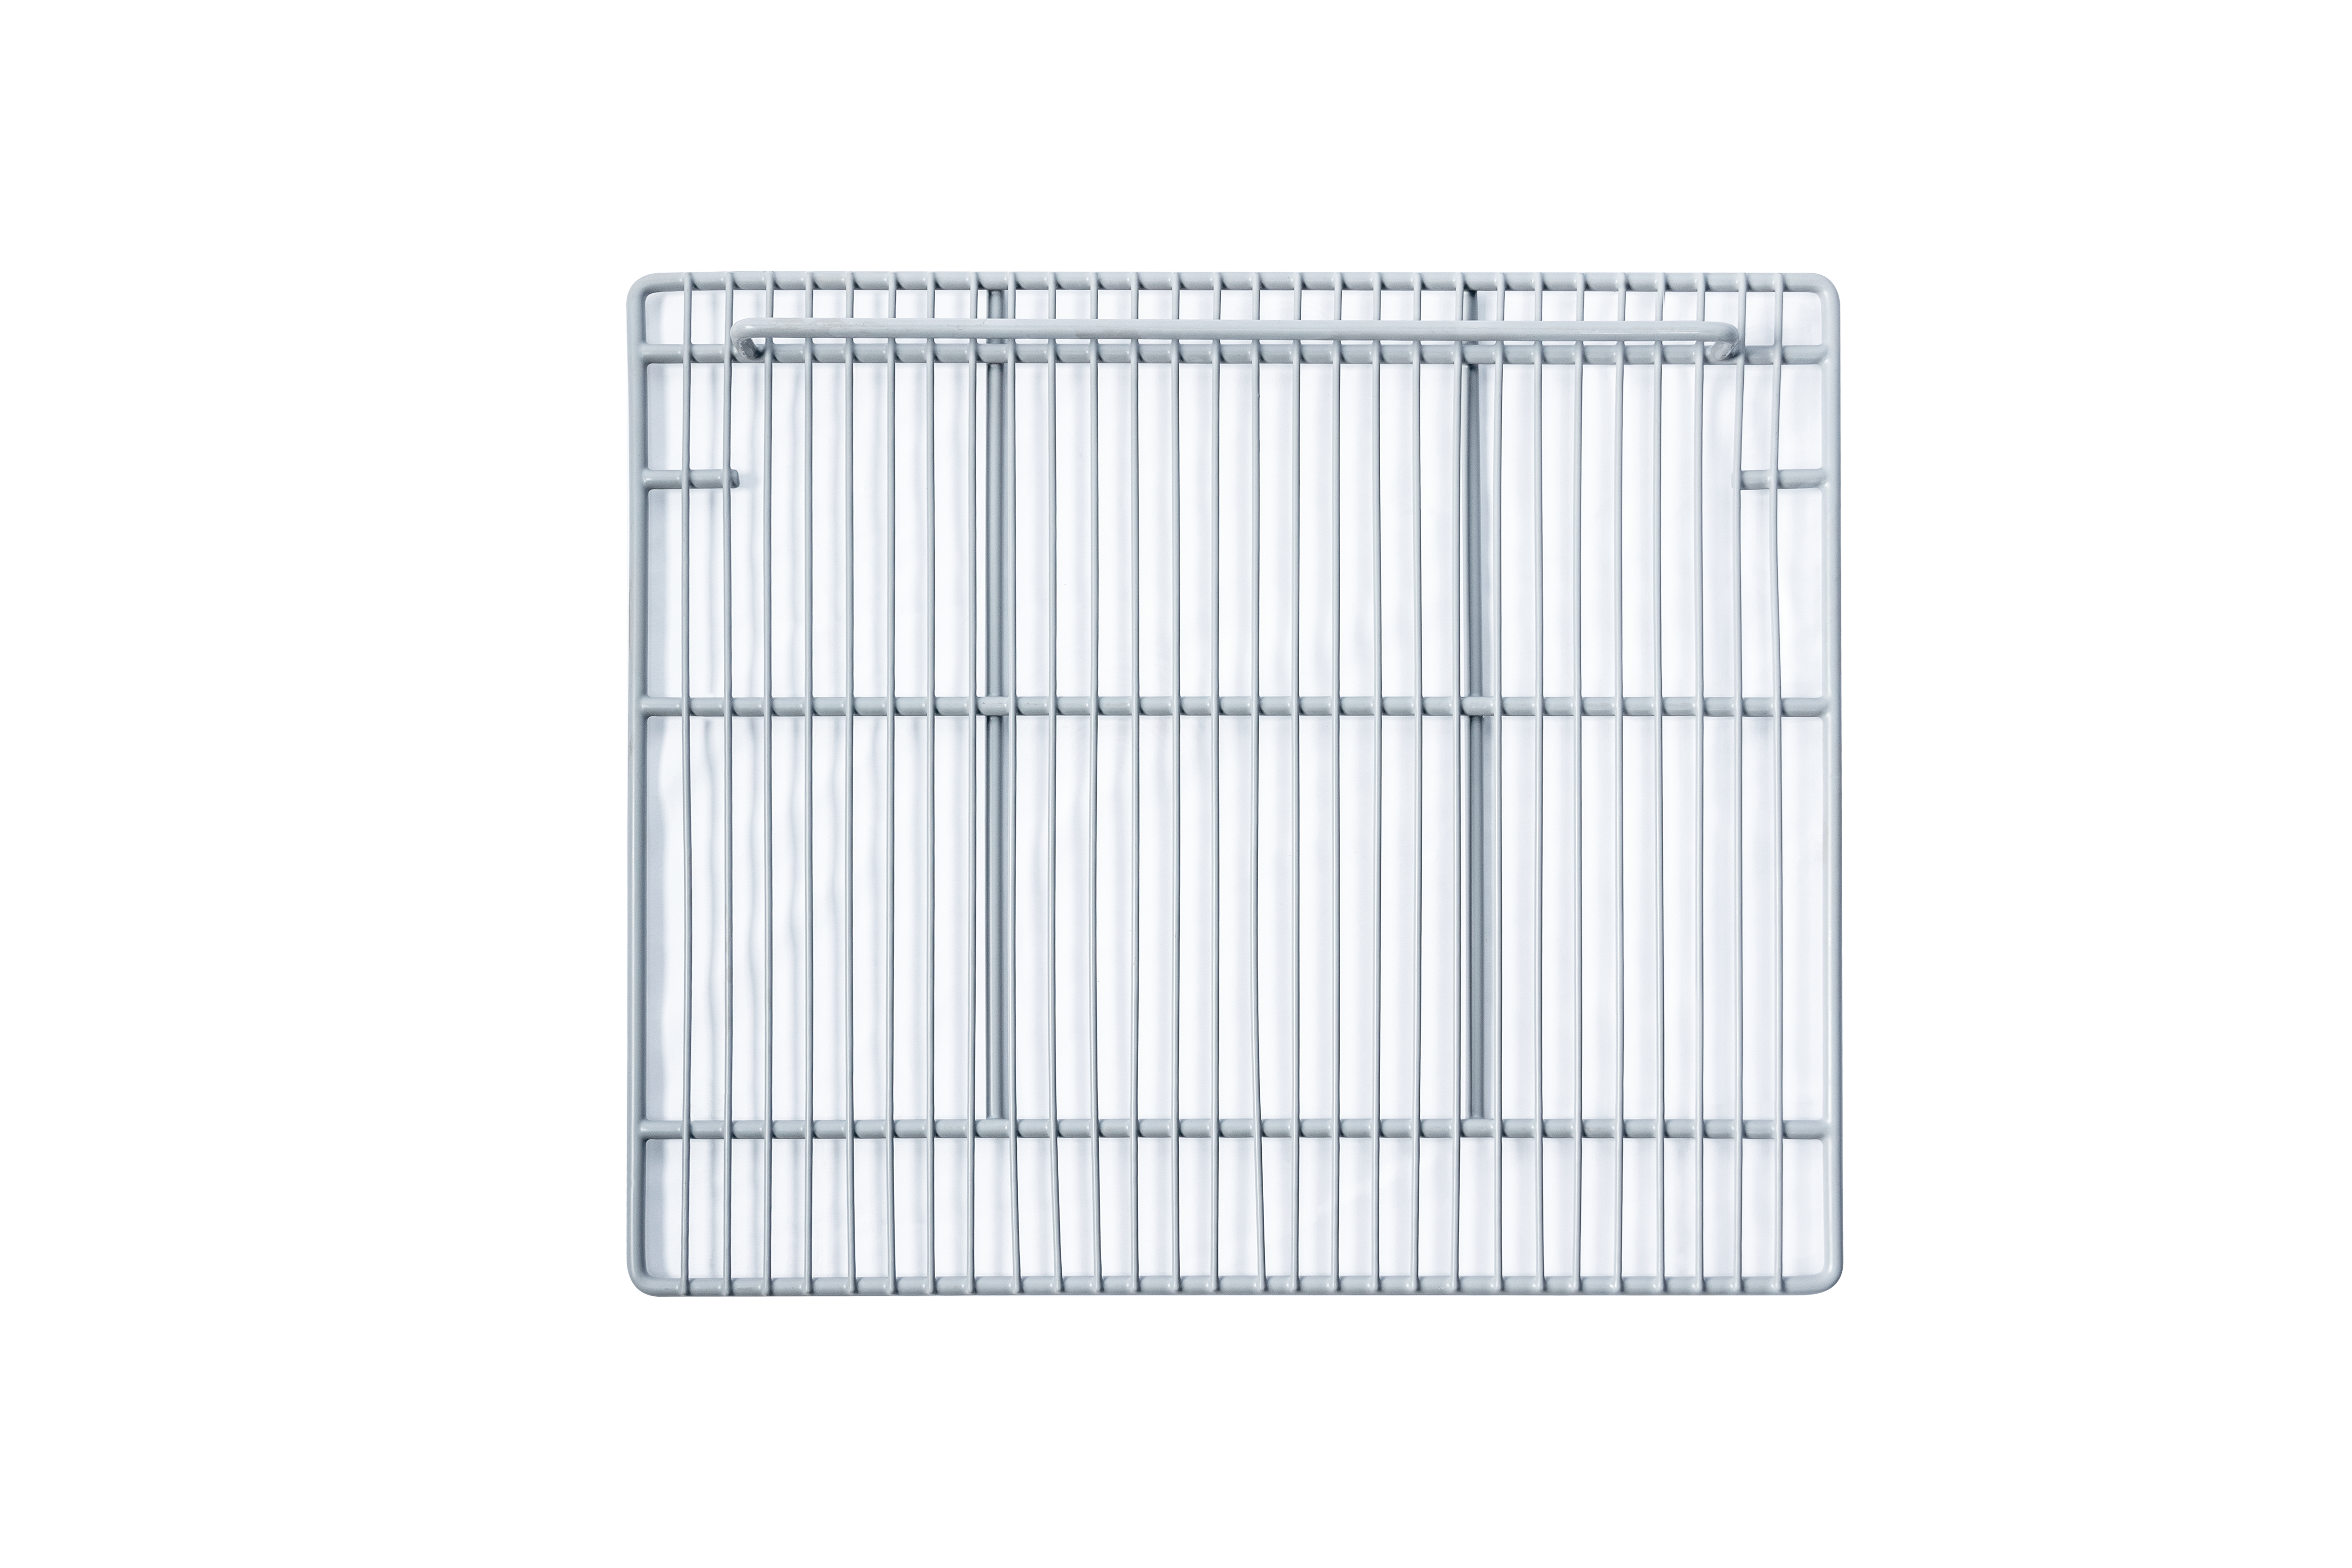 Adjustable Epoxy-coated Wire Shelf (Middle) for TSSP72- Enhance Organization with Sturdy Utility Shelf - (Gray) Commercial Refrigerator Shelf